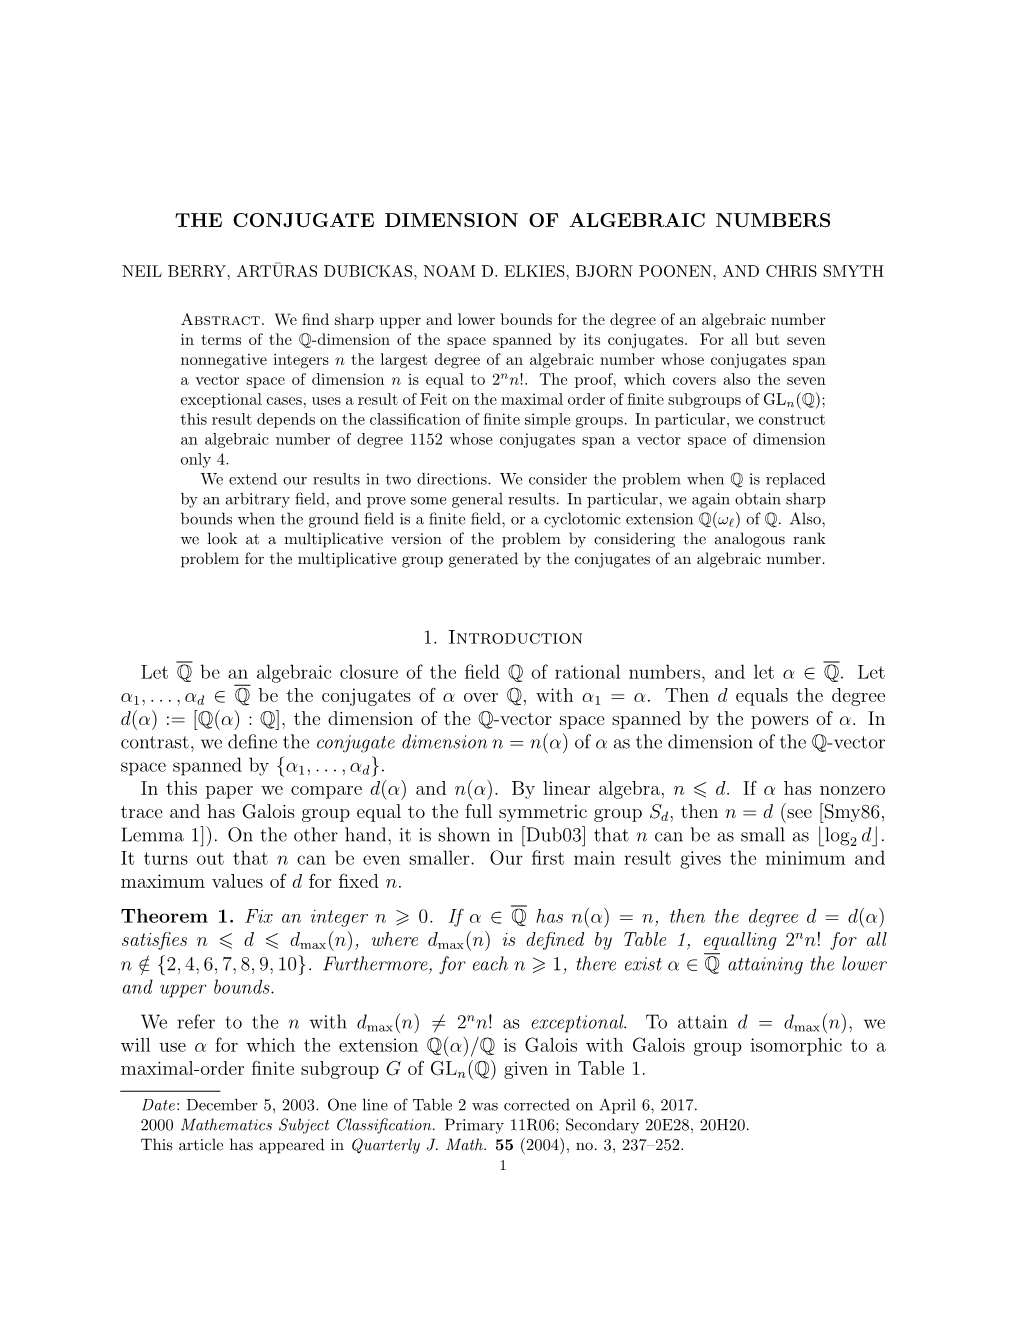 The Conjugate Dimension of Algebraic Numbers